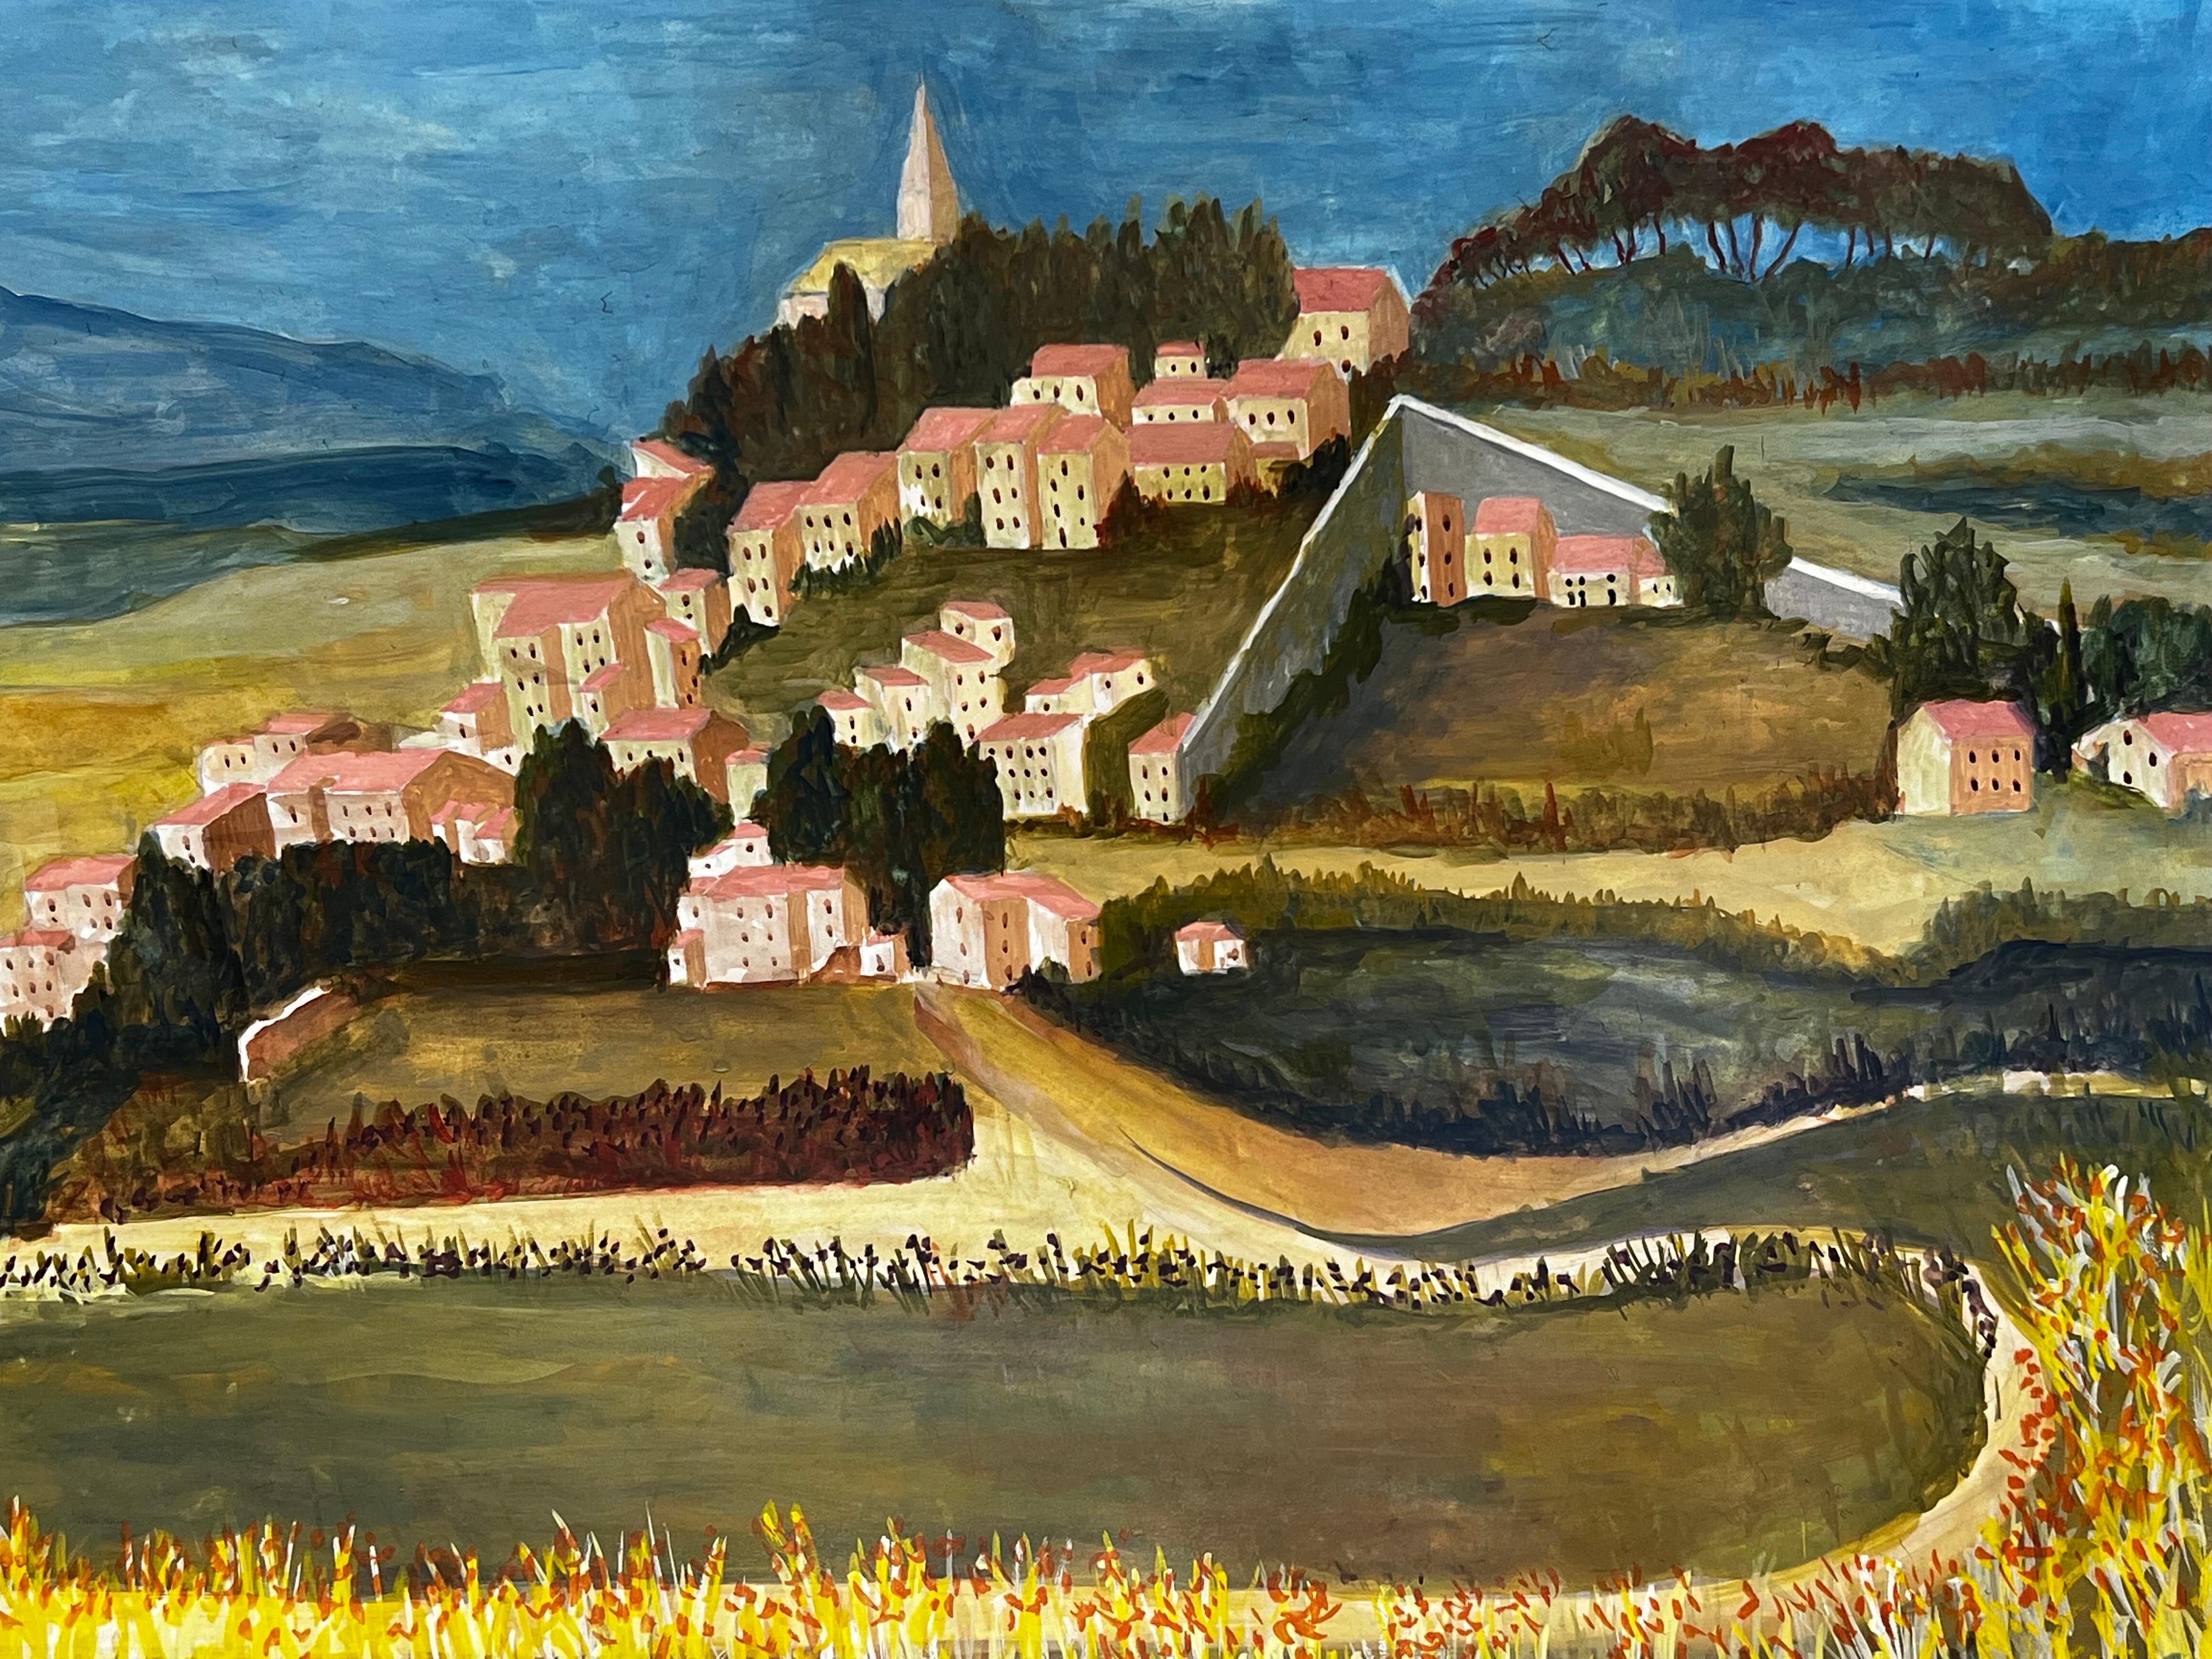 Bernard Labbe Landscape Painting - 1950's Modernist/ Cubist Painting - Stunning French Landscape